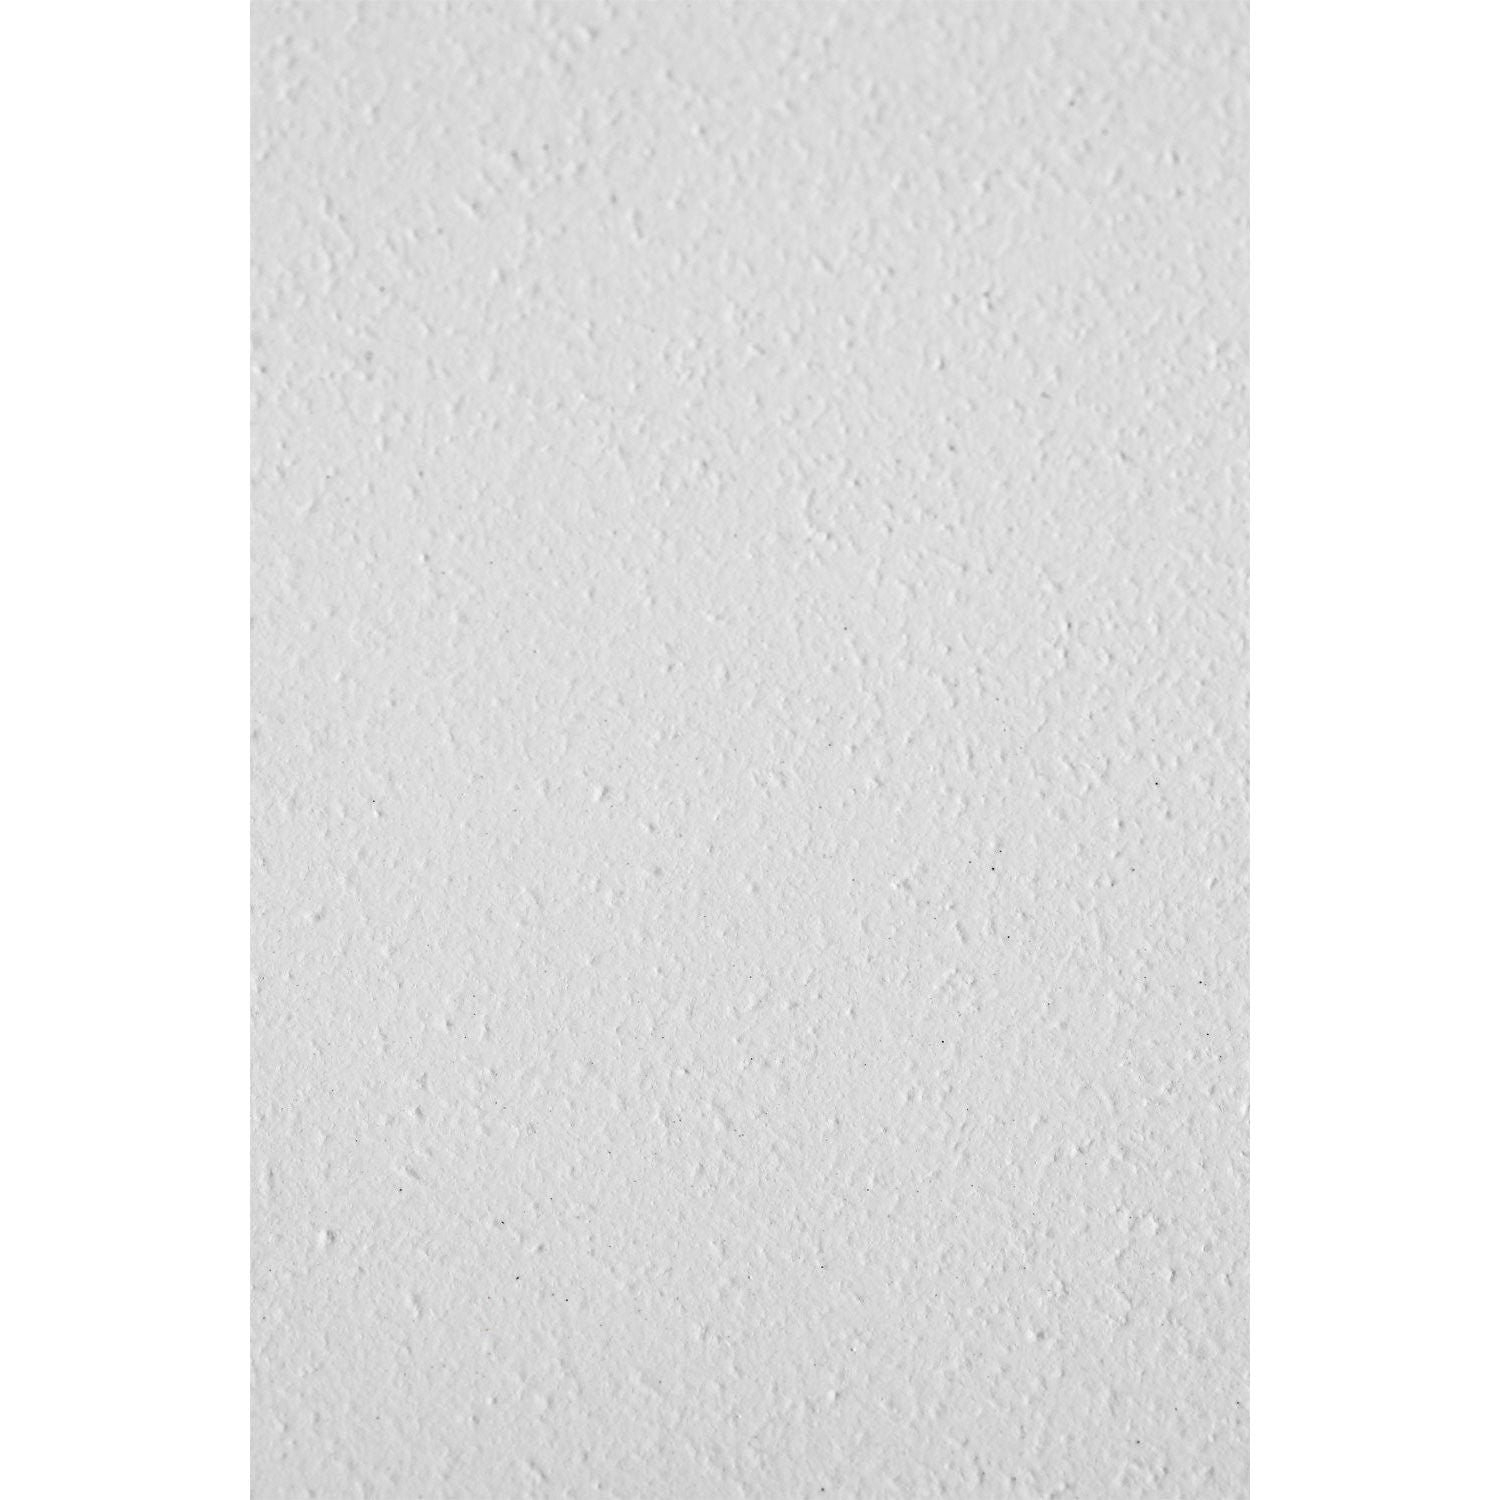 Apvalus cementinis ZELDA stalas (Ø120 cm), baltos spalvos